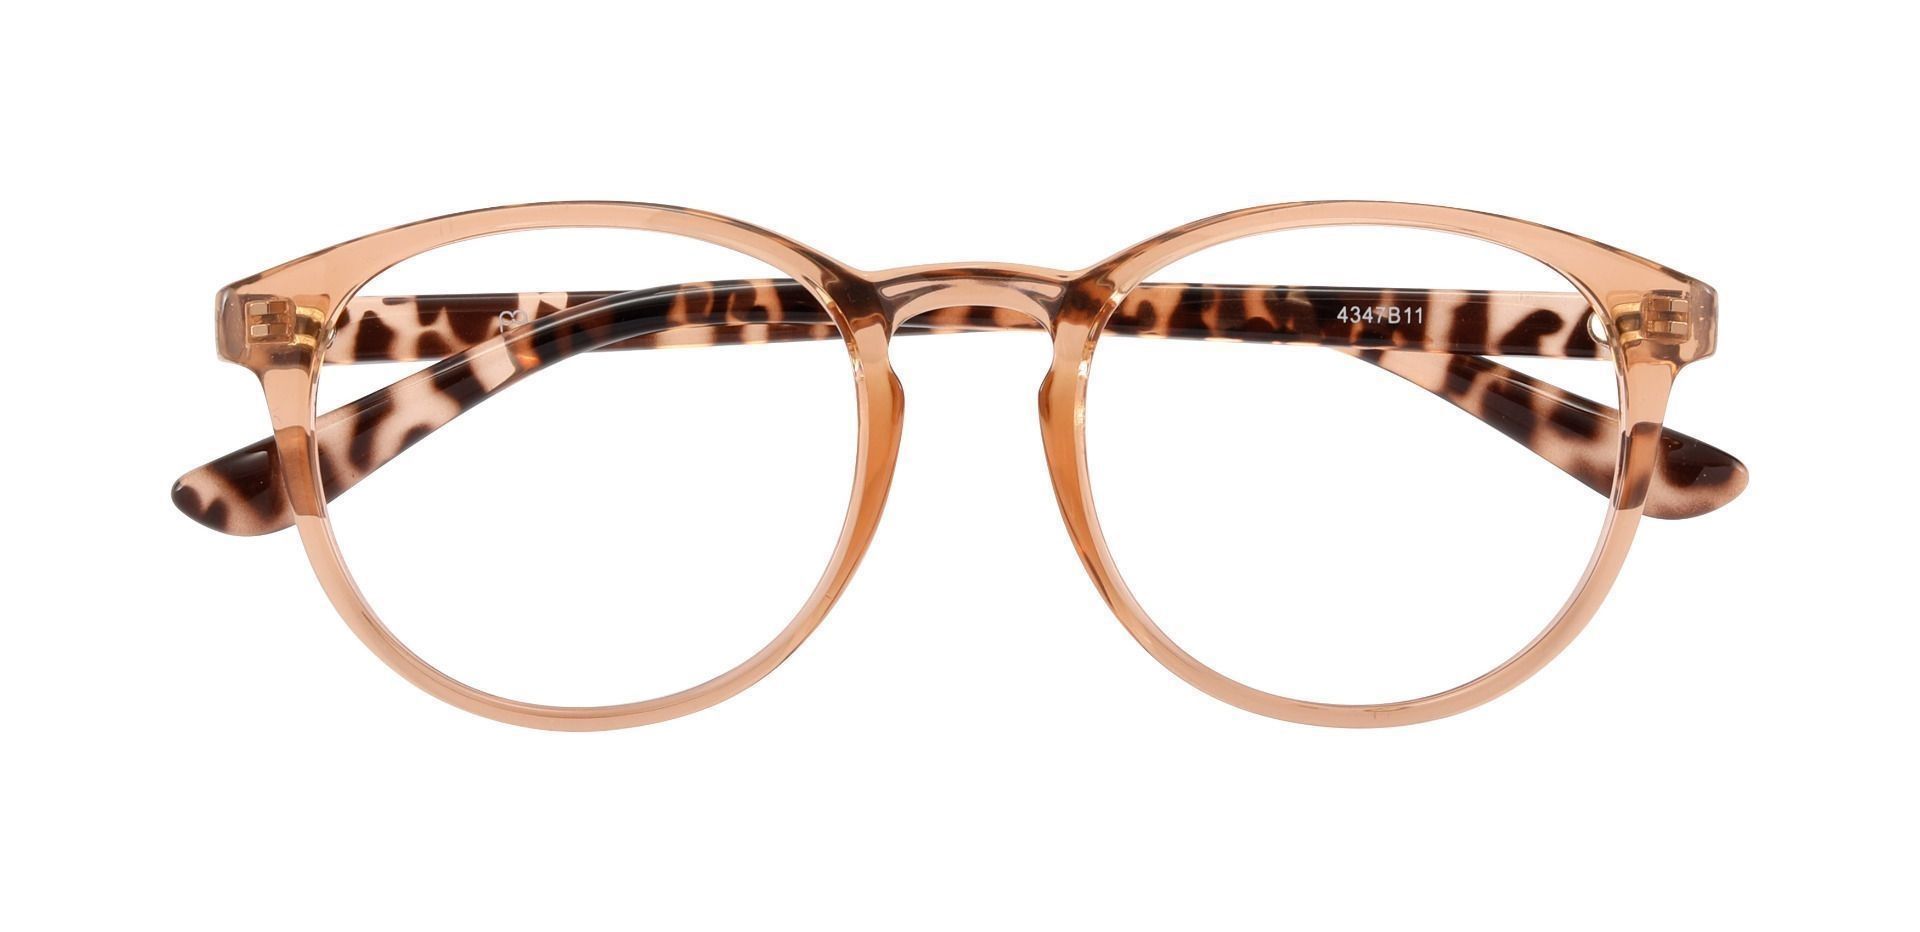 Clarita Oval Reading Glasses - Brown